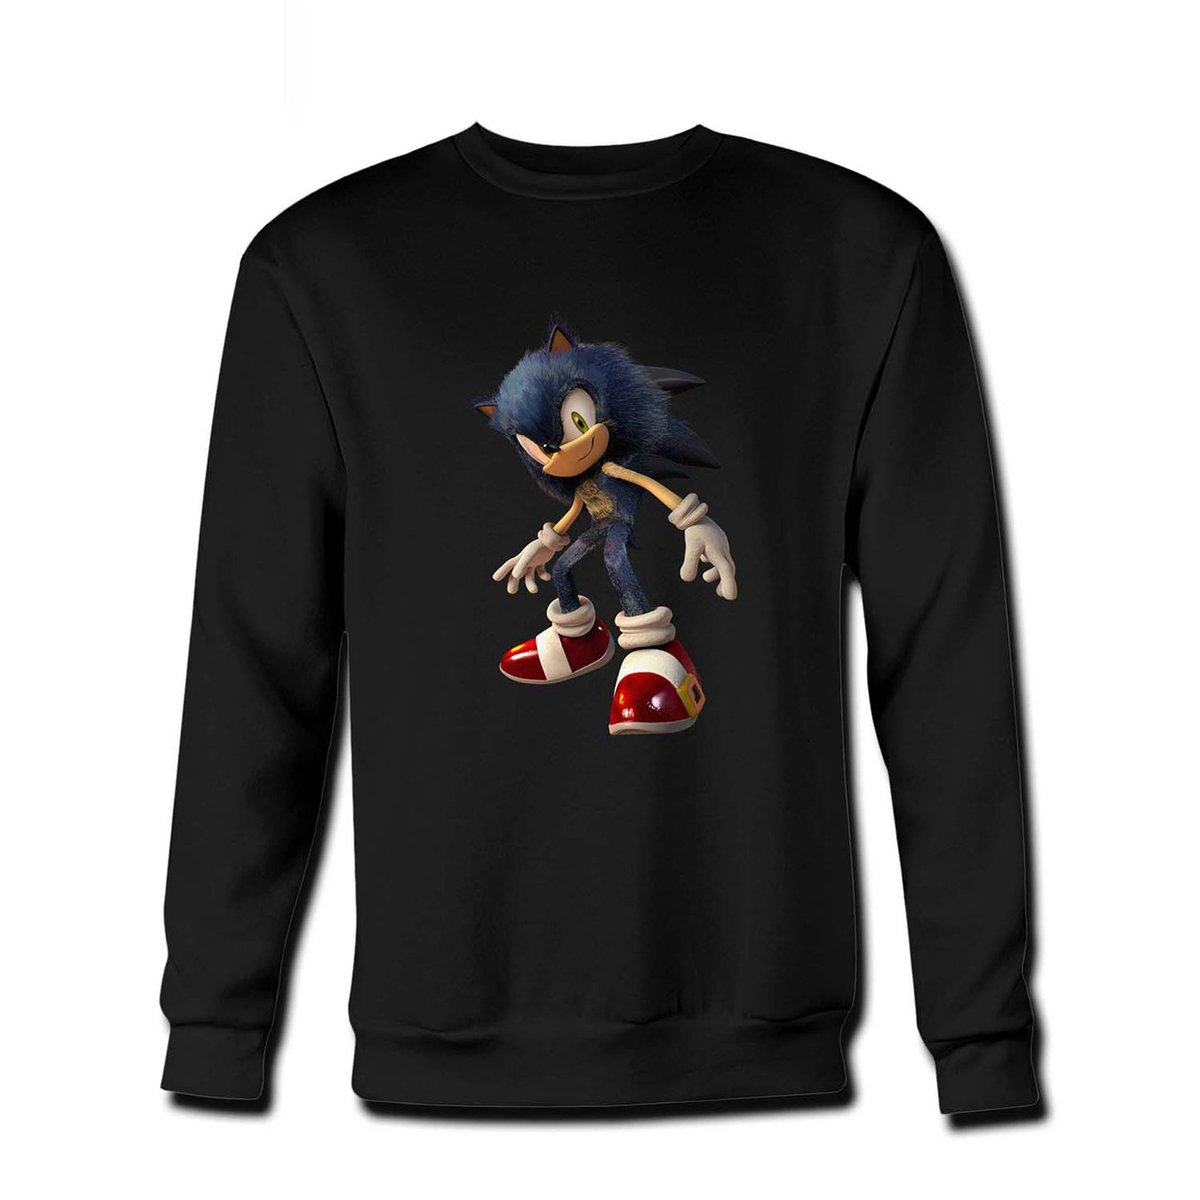 Sonic The Hedgehog The Movie Fresh Best Crewneck Sweatshirt
https://t.co/nbwAc5pRAV https://t.co/DOWyQegkK2